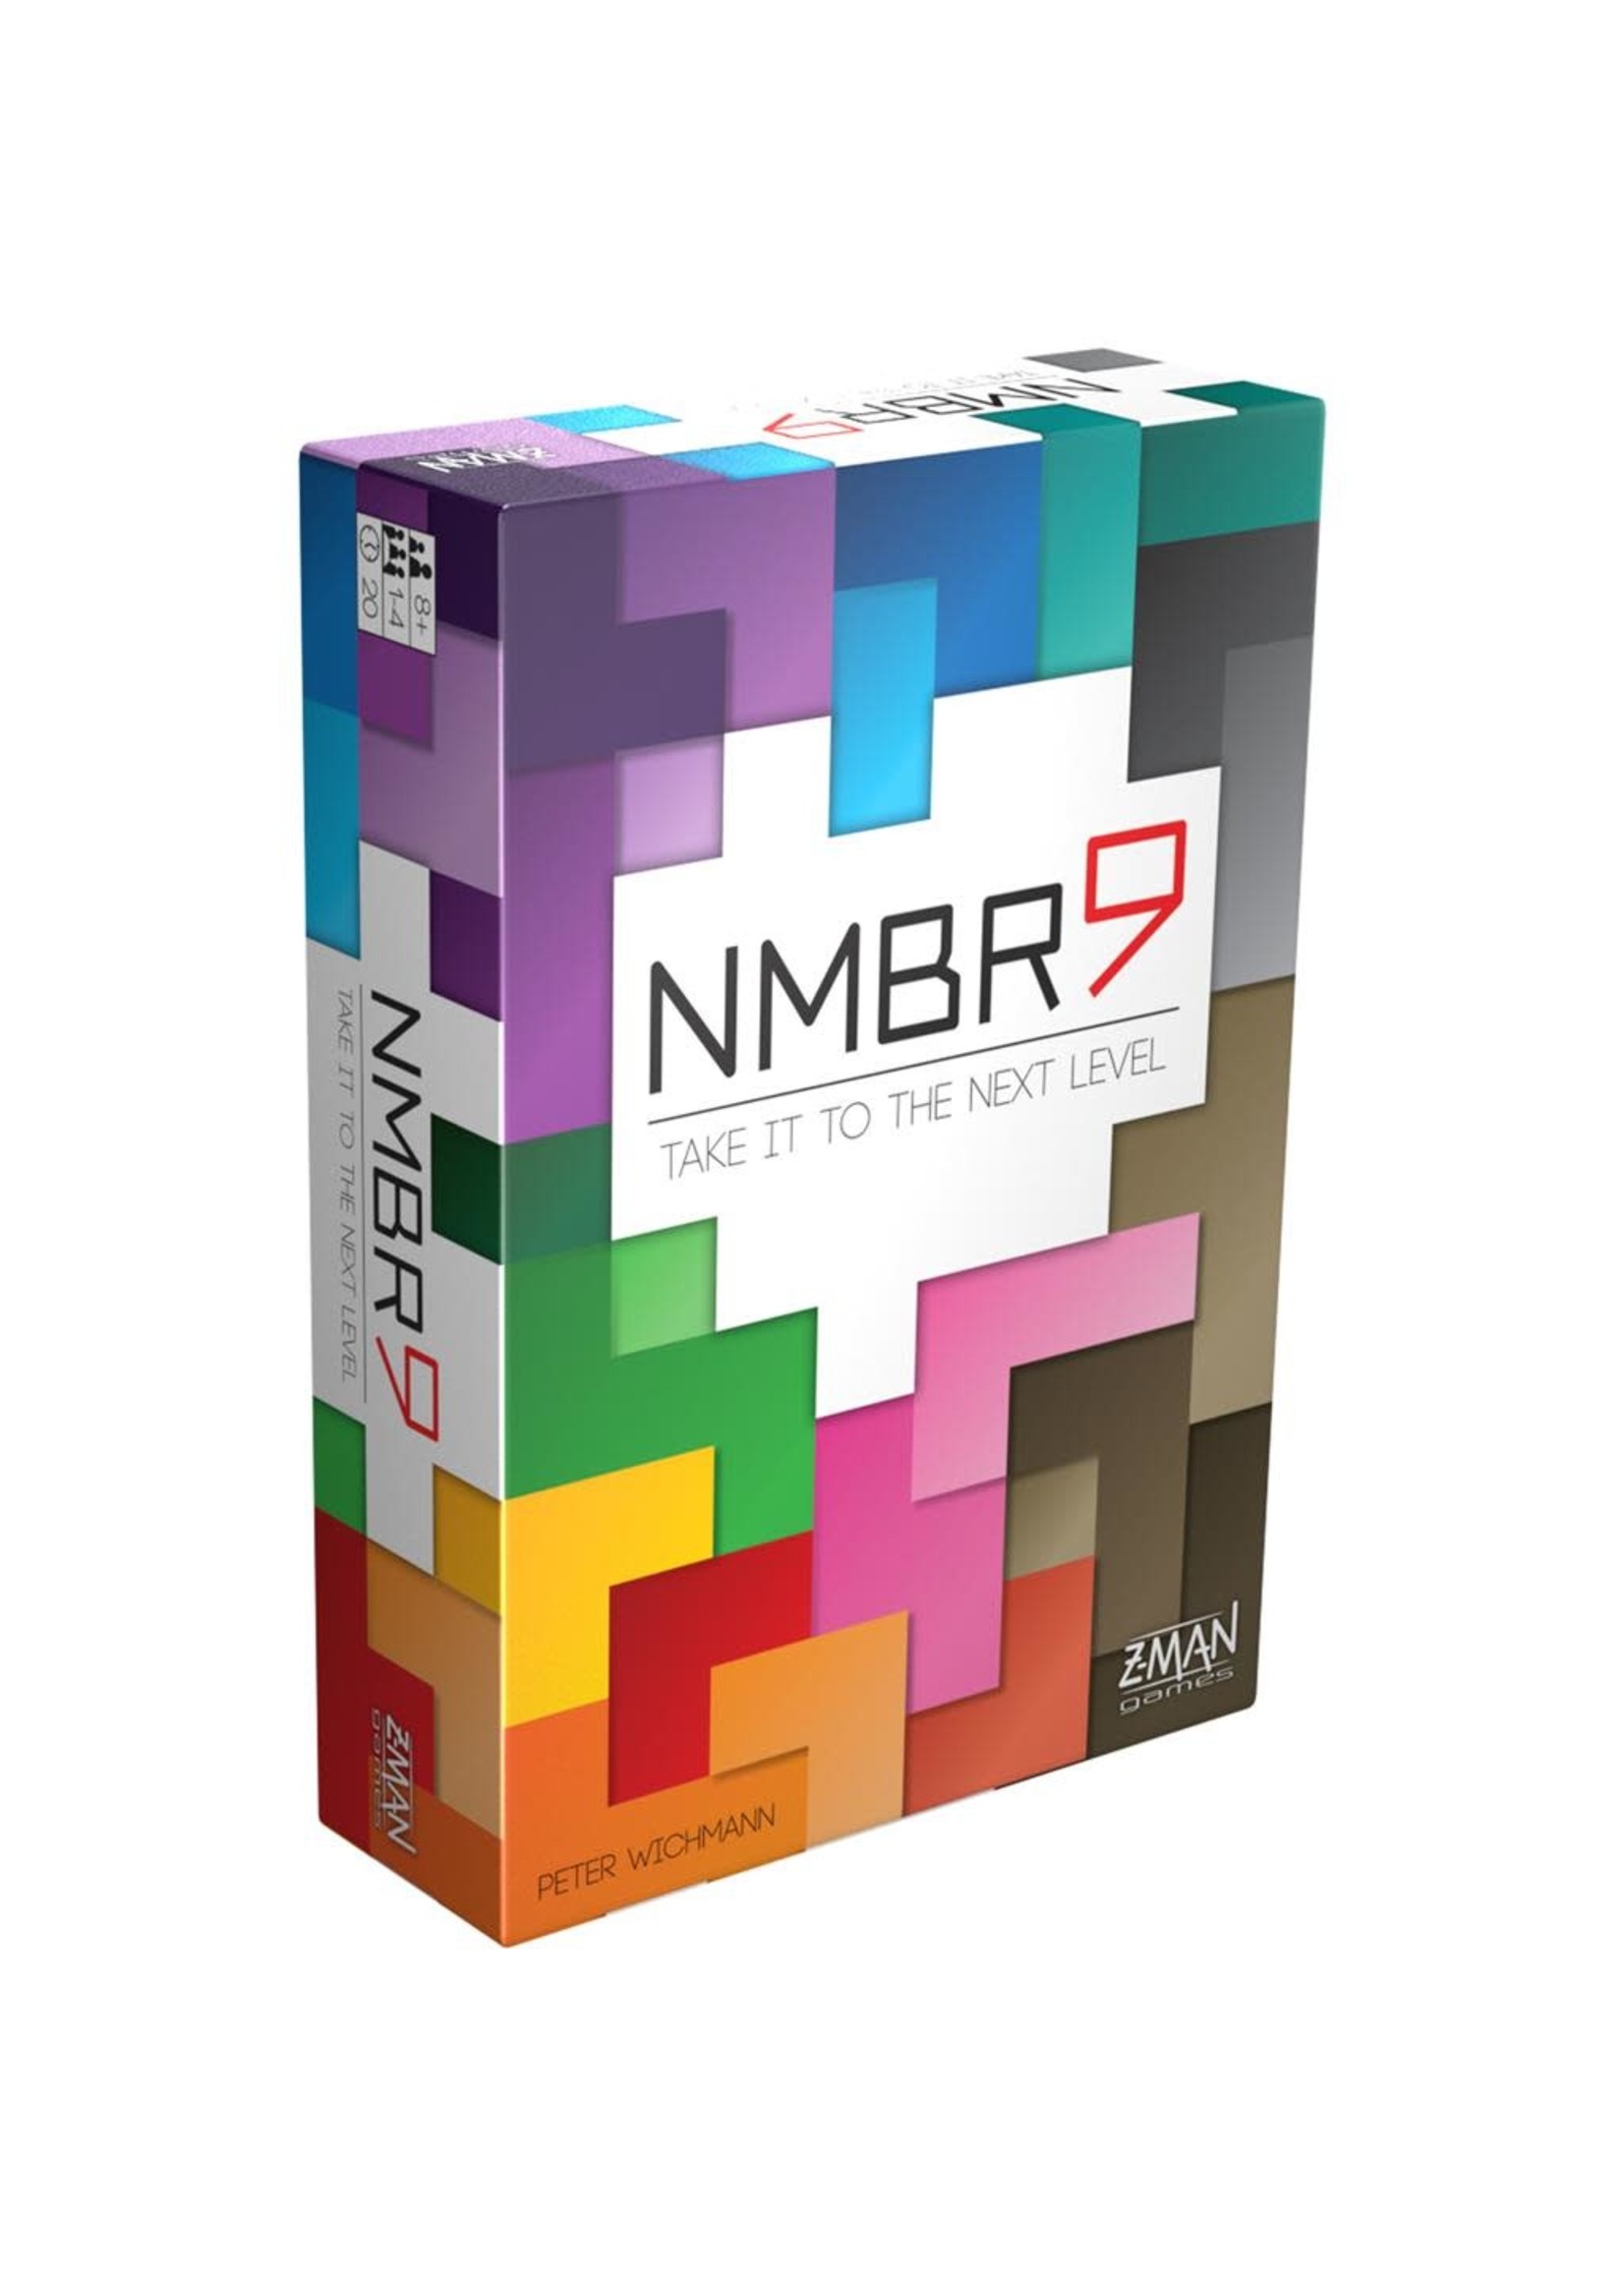 Rental RENTAL - NMBR 9 (B) 1 Lb 7.8 oz